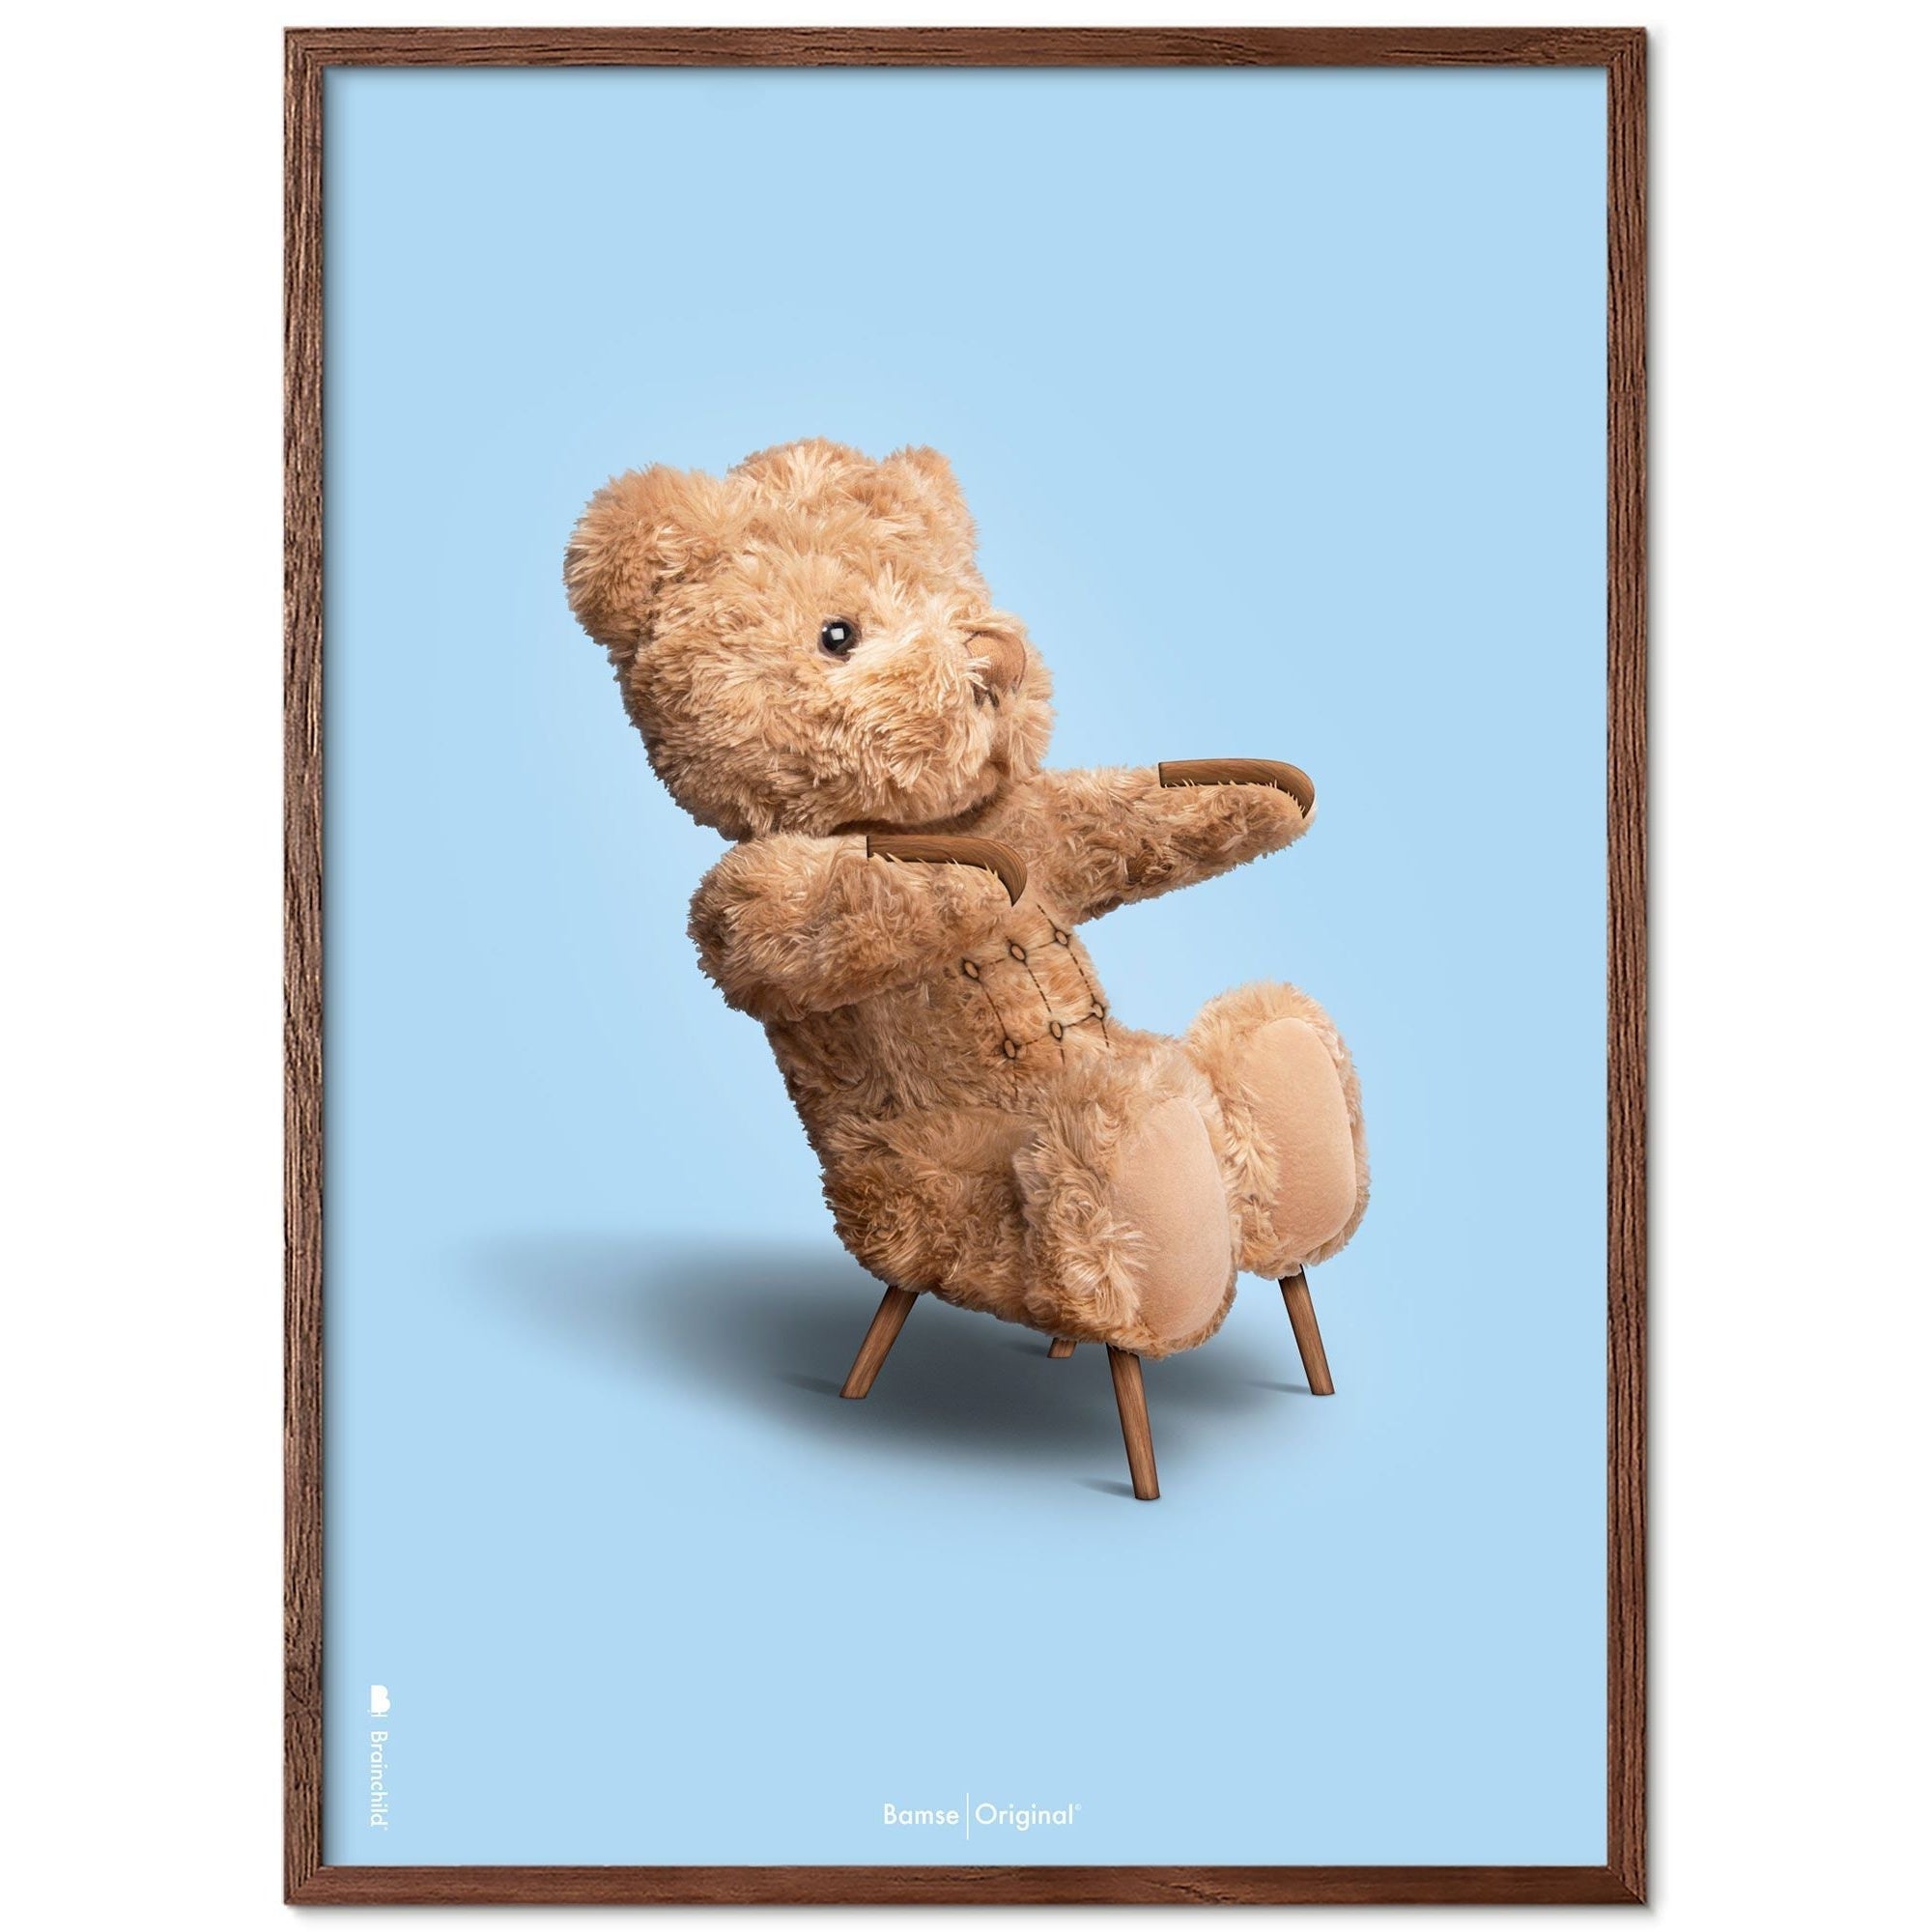 Brainchild Teddy Bear Classic juliste Dark Wood Frame Ram A5, vaaleansininen tausta